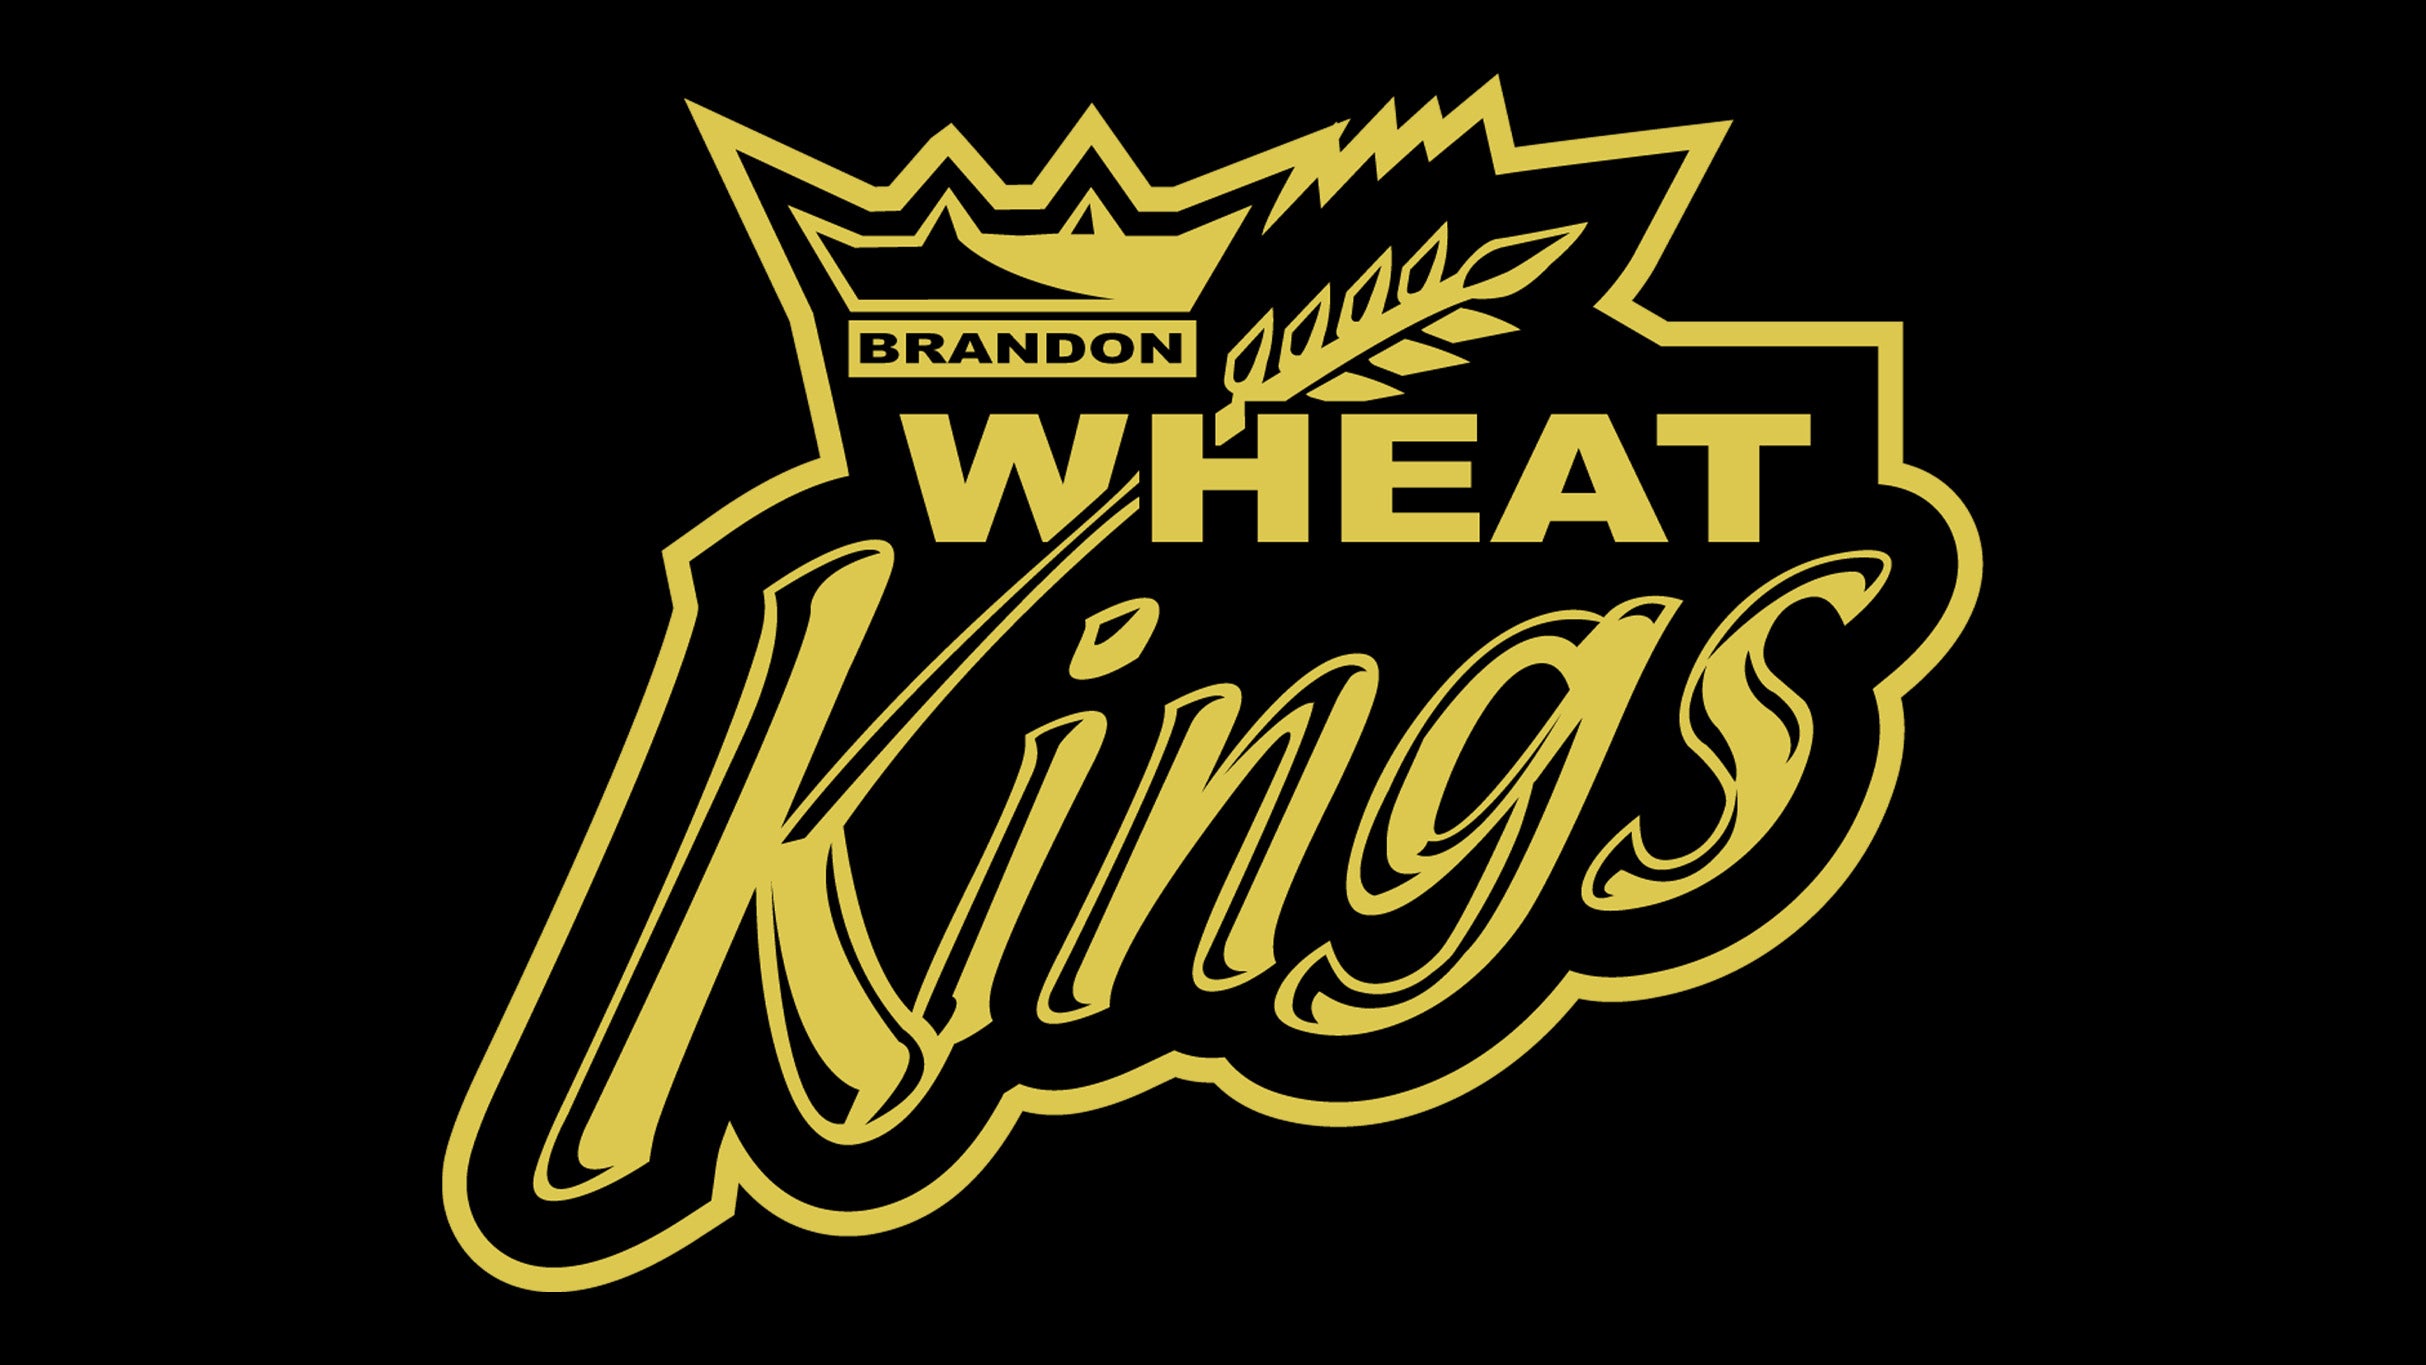 Brandon Wheat Kings vs. Swift Current Broncos in Brandon promo photo for Youth / Child Girl Power Ticket presale offer code